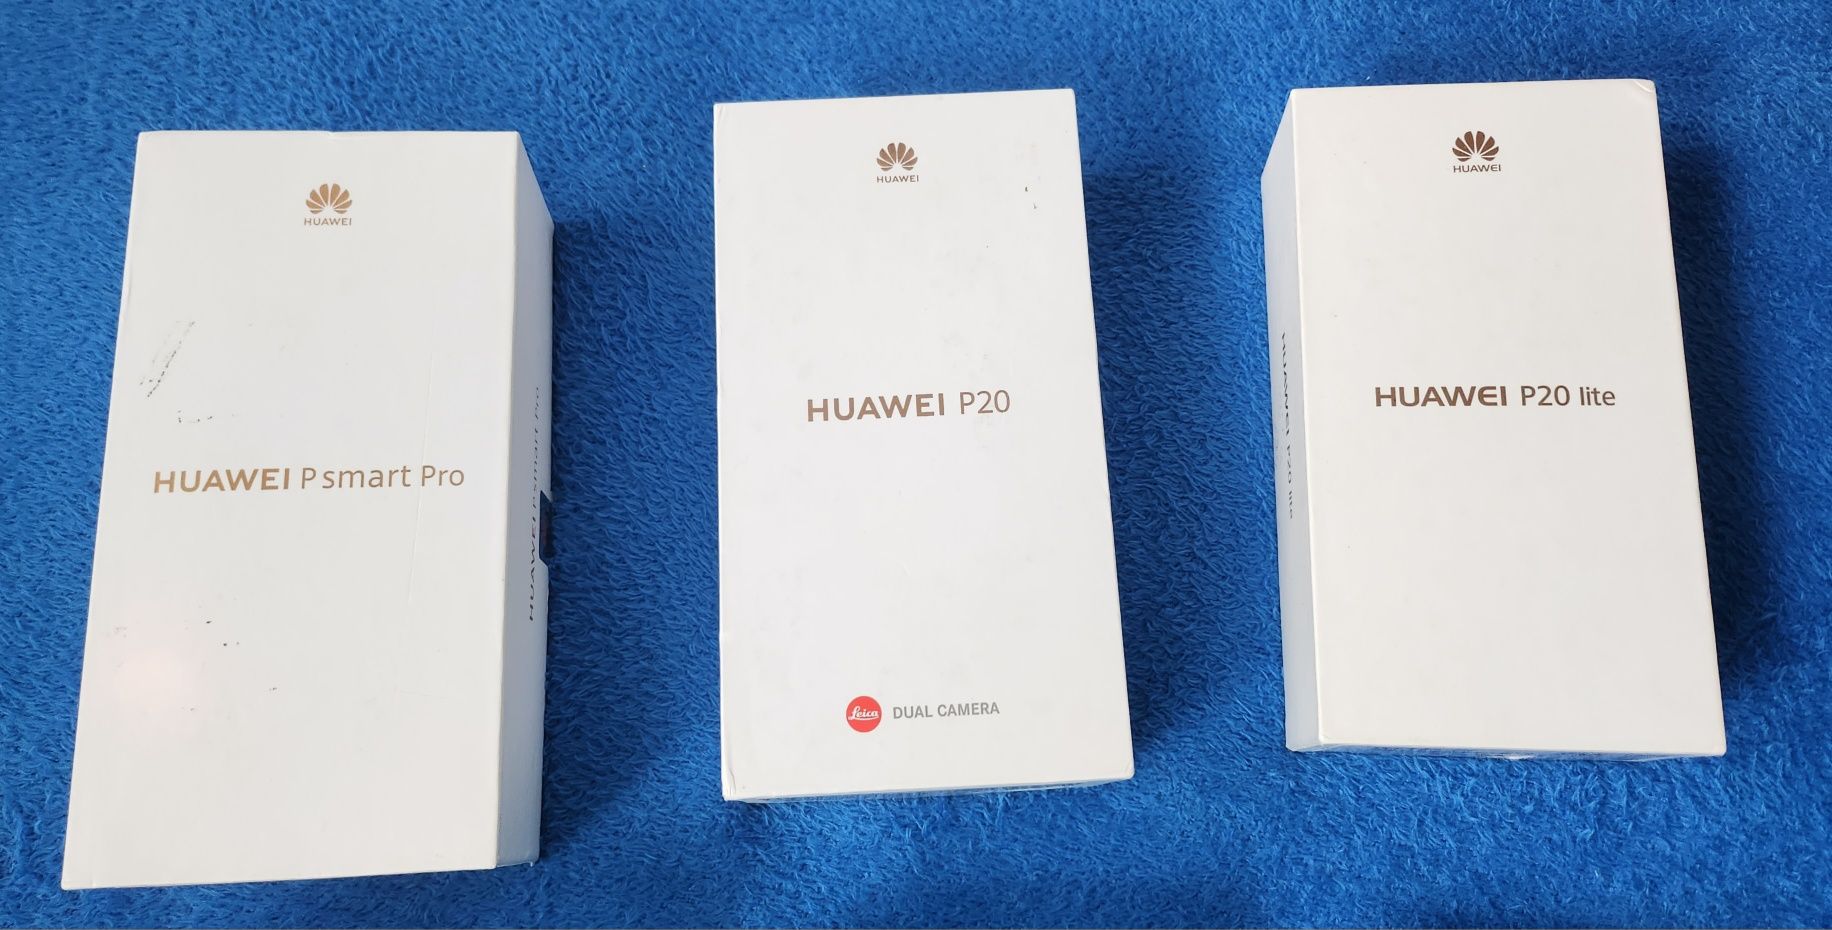 Zestaw 6 pudełek po telefonach Huawei